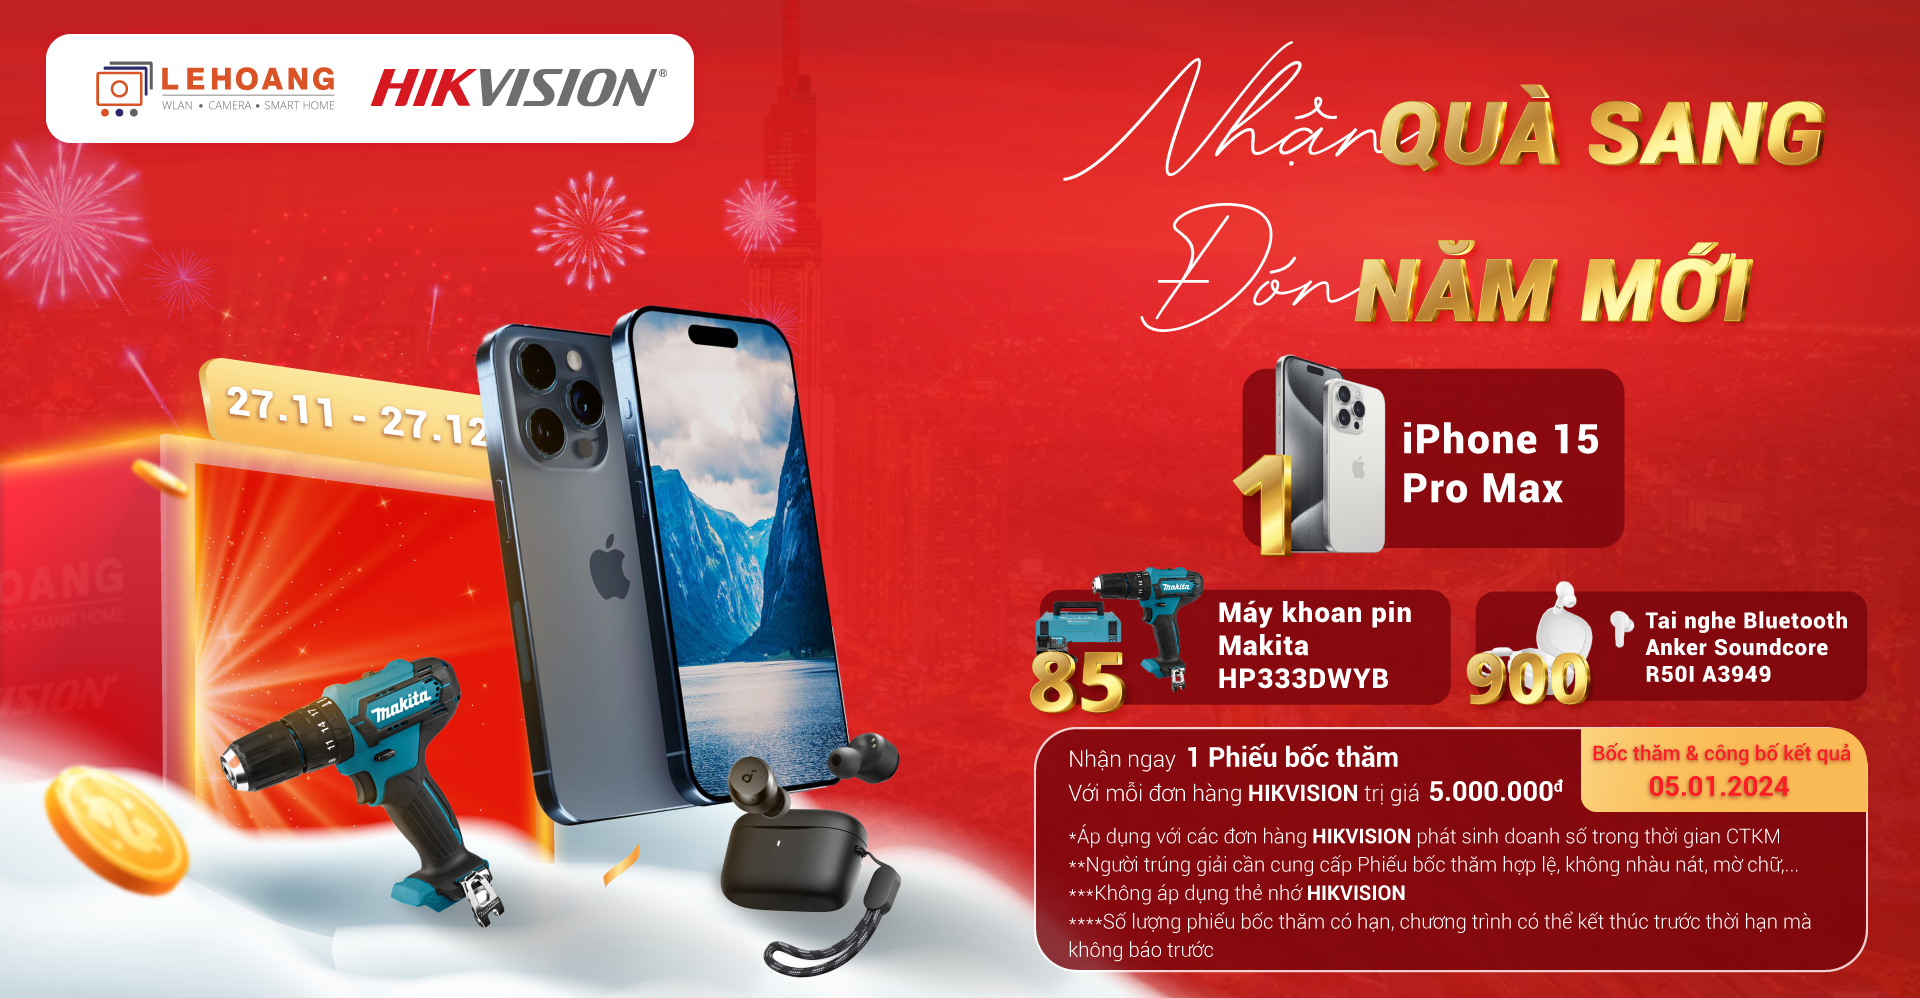 nhan-qua-sang-don-nam-moi-lucky-draw-iphone-15-pro-max-hikvision-le-hoang